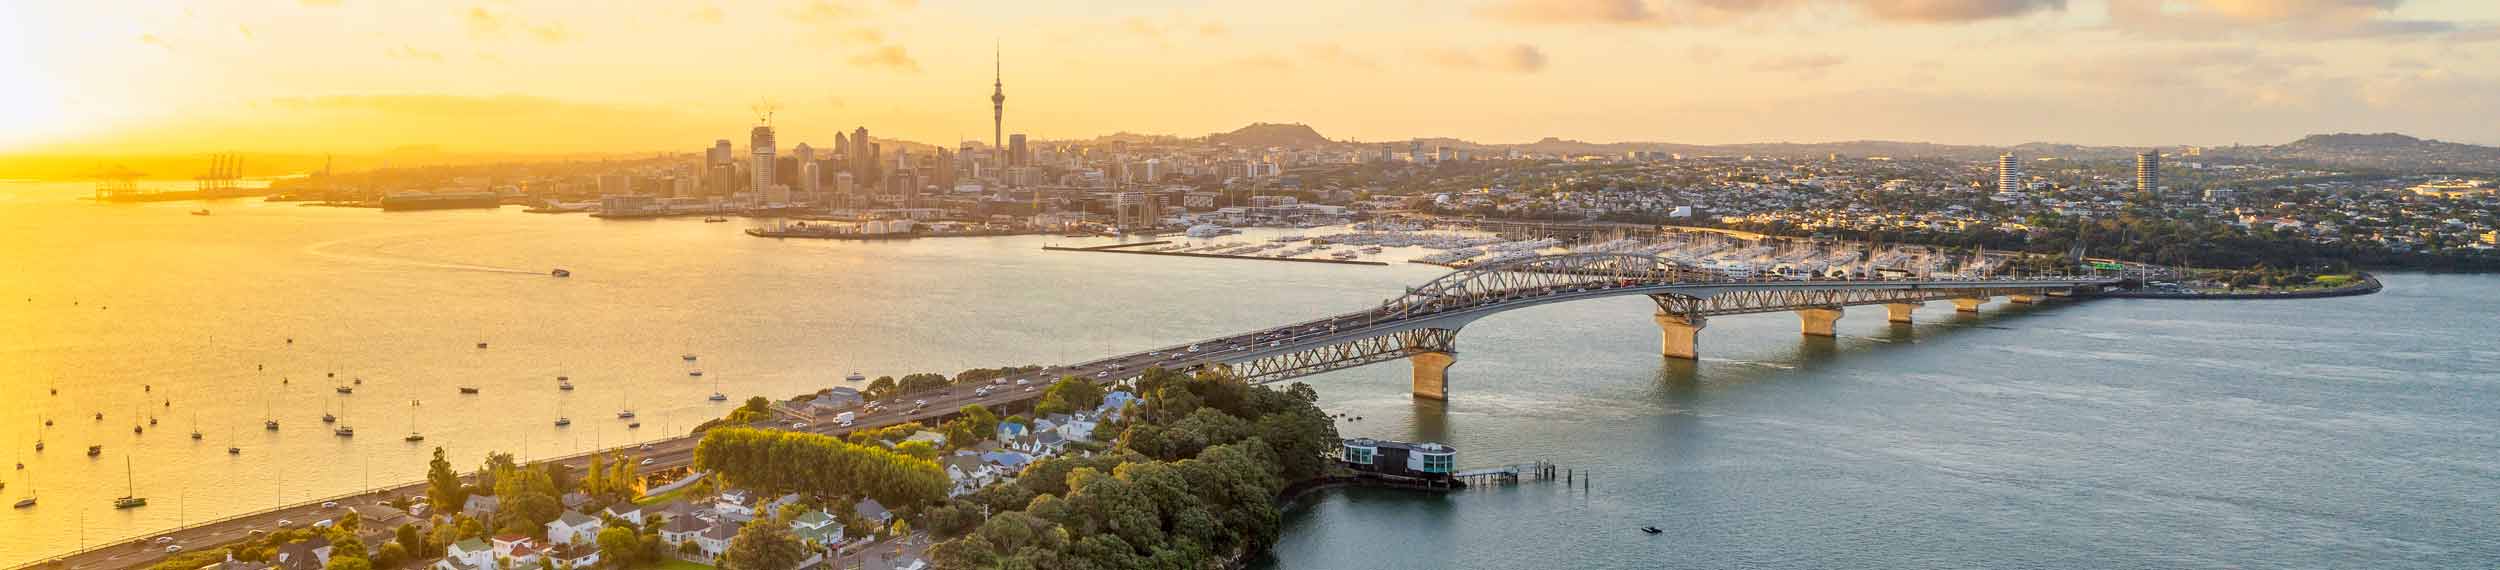 Auckland panorama at sunrise.